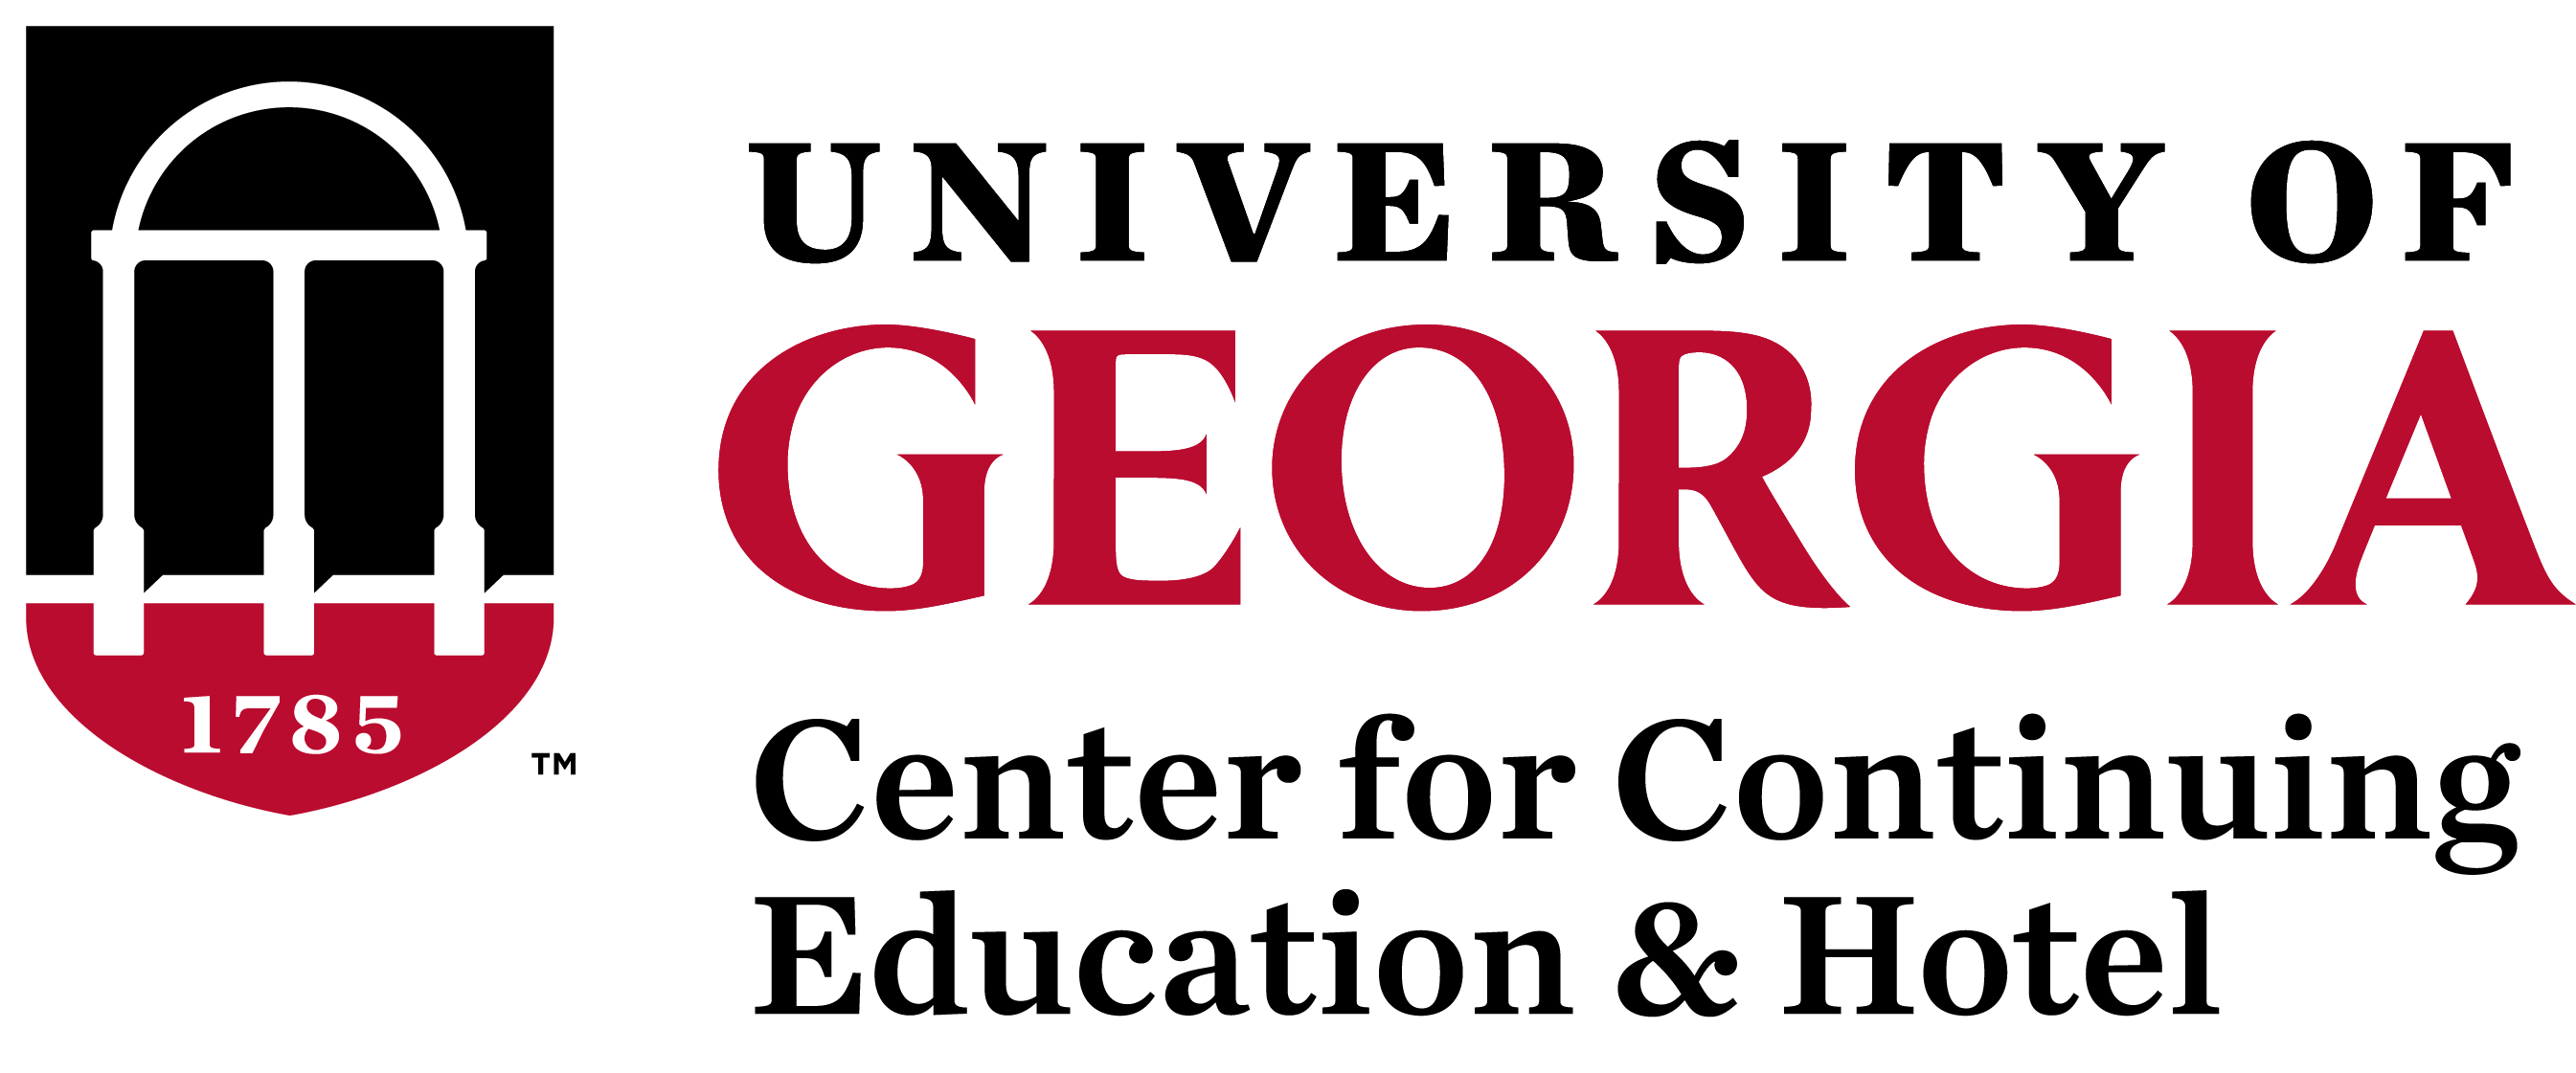 The University of Georgia Center for Continuing Education & Hotel Full Stack Software Developer Certificate Program logo